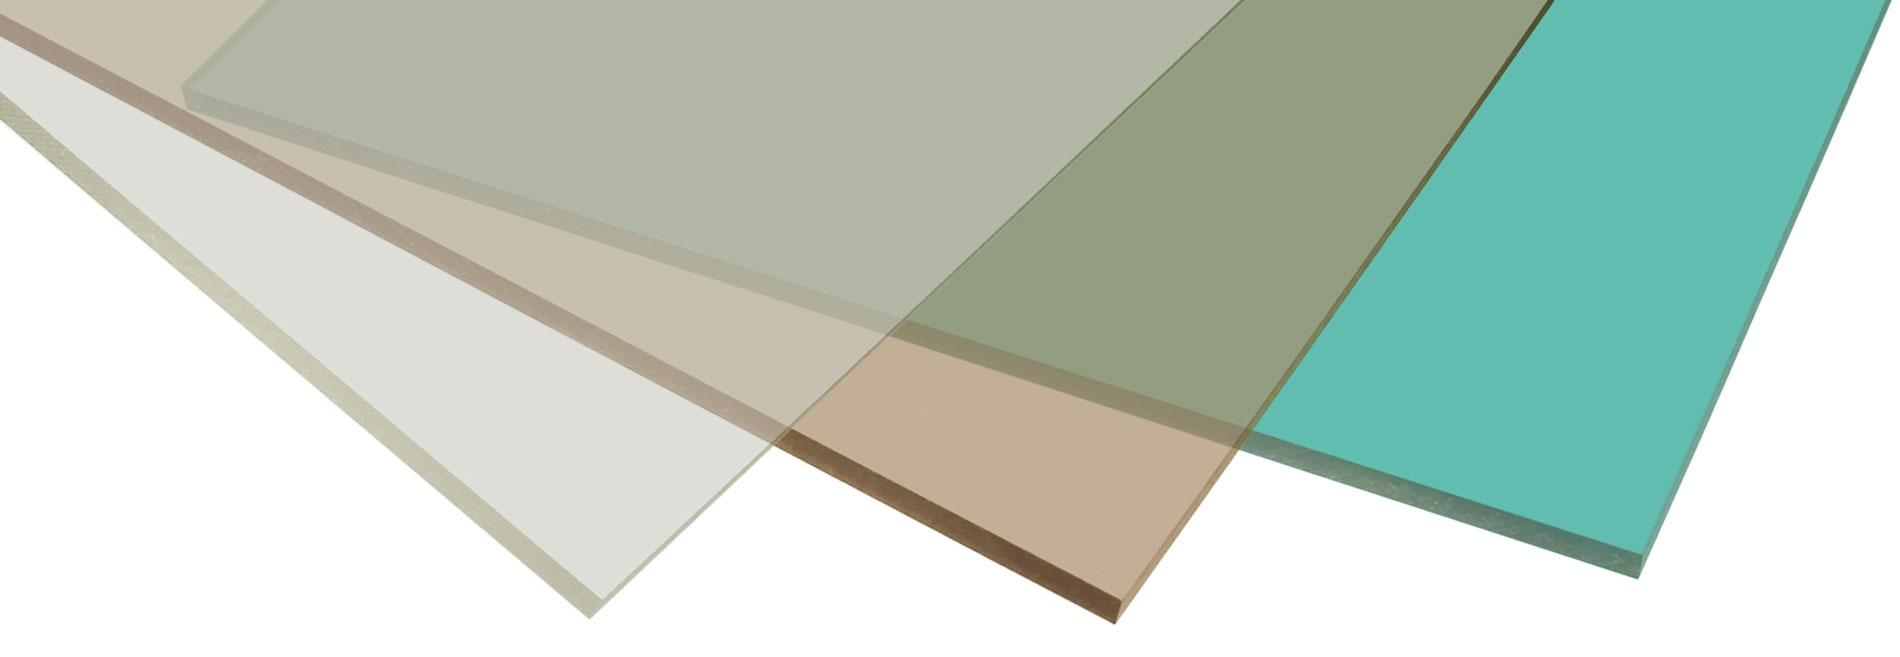 BPS Paneles de policarbonato a prueba de gazebo de 38 x 62 pulgadas,  paneles de policarbonato impermeable con protección UV, láminas  transparentes